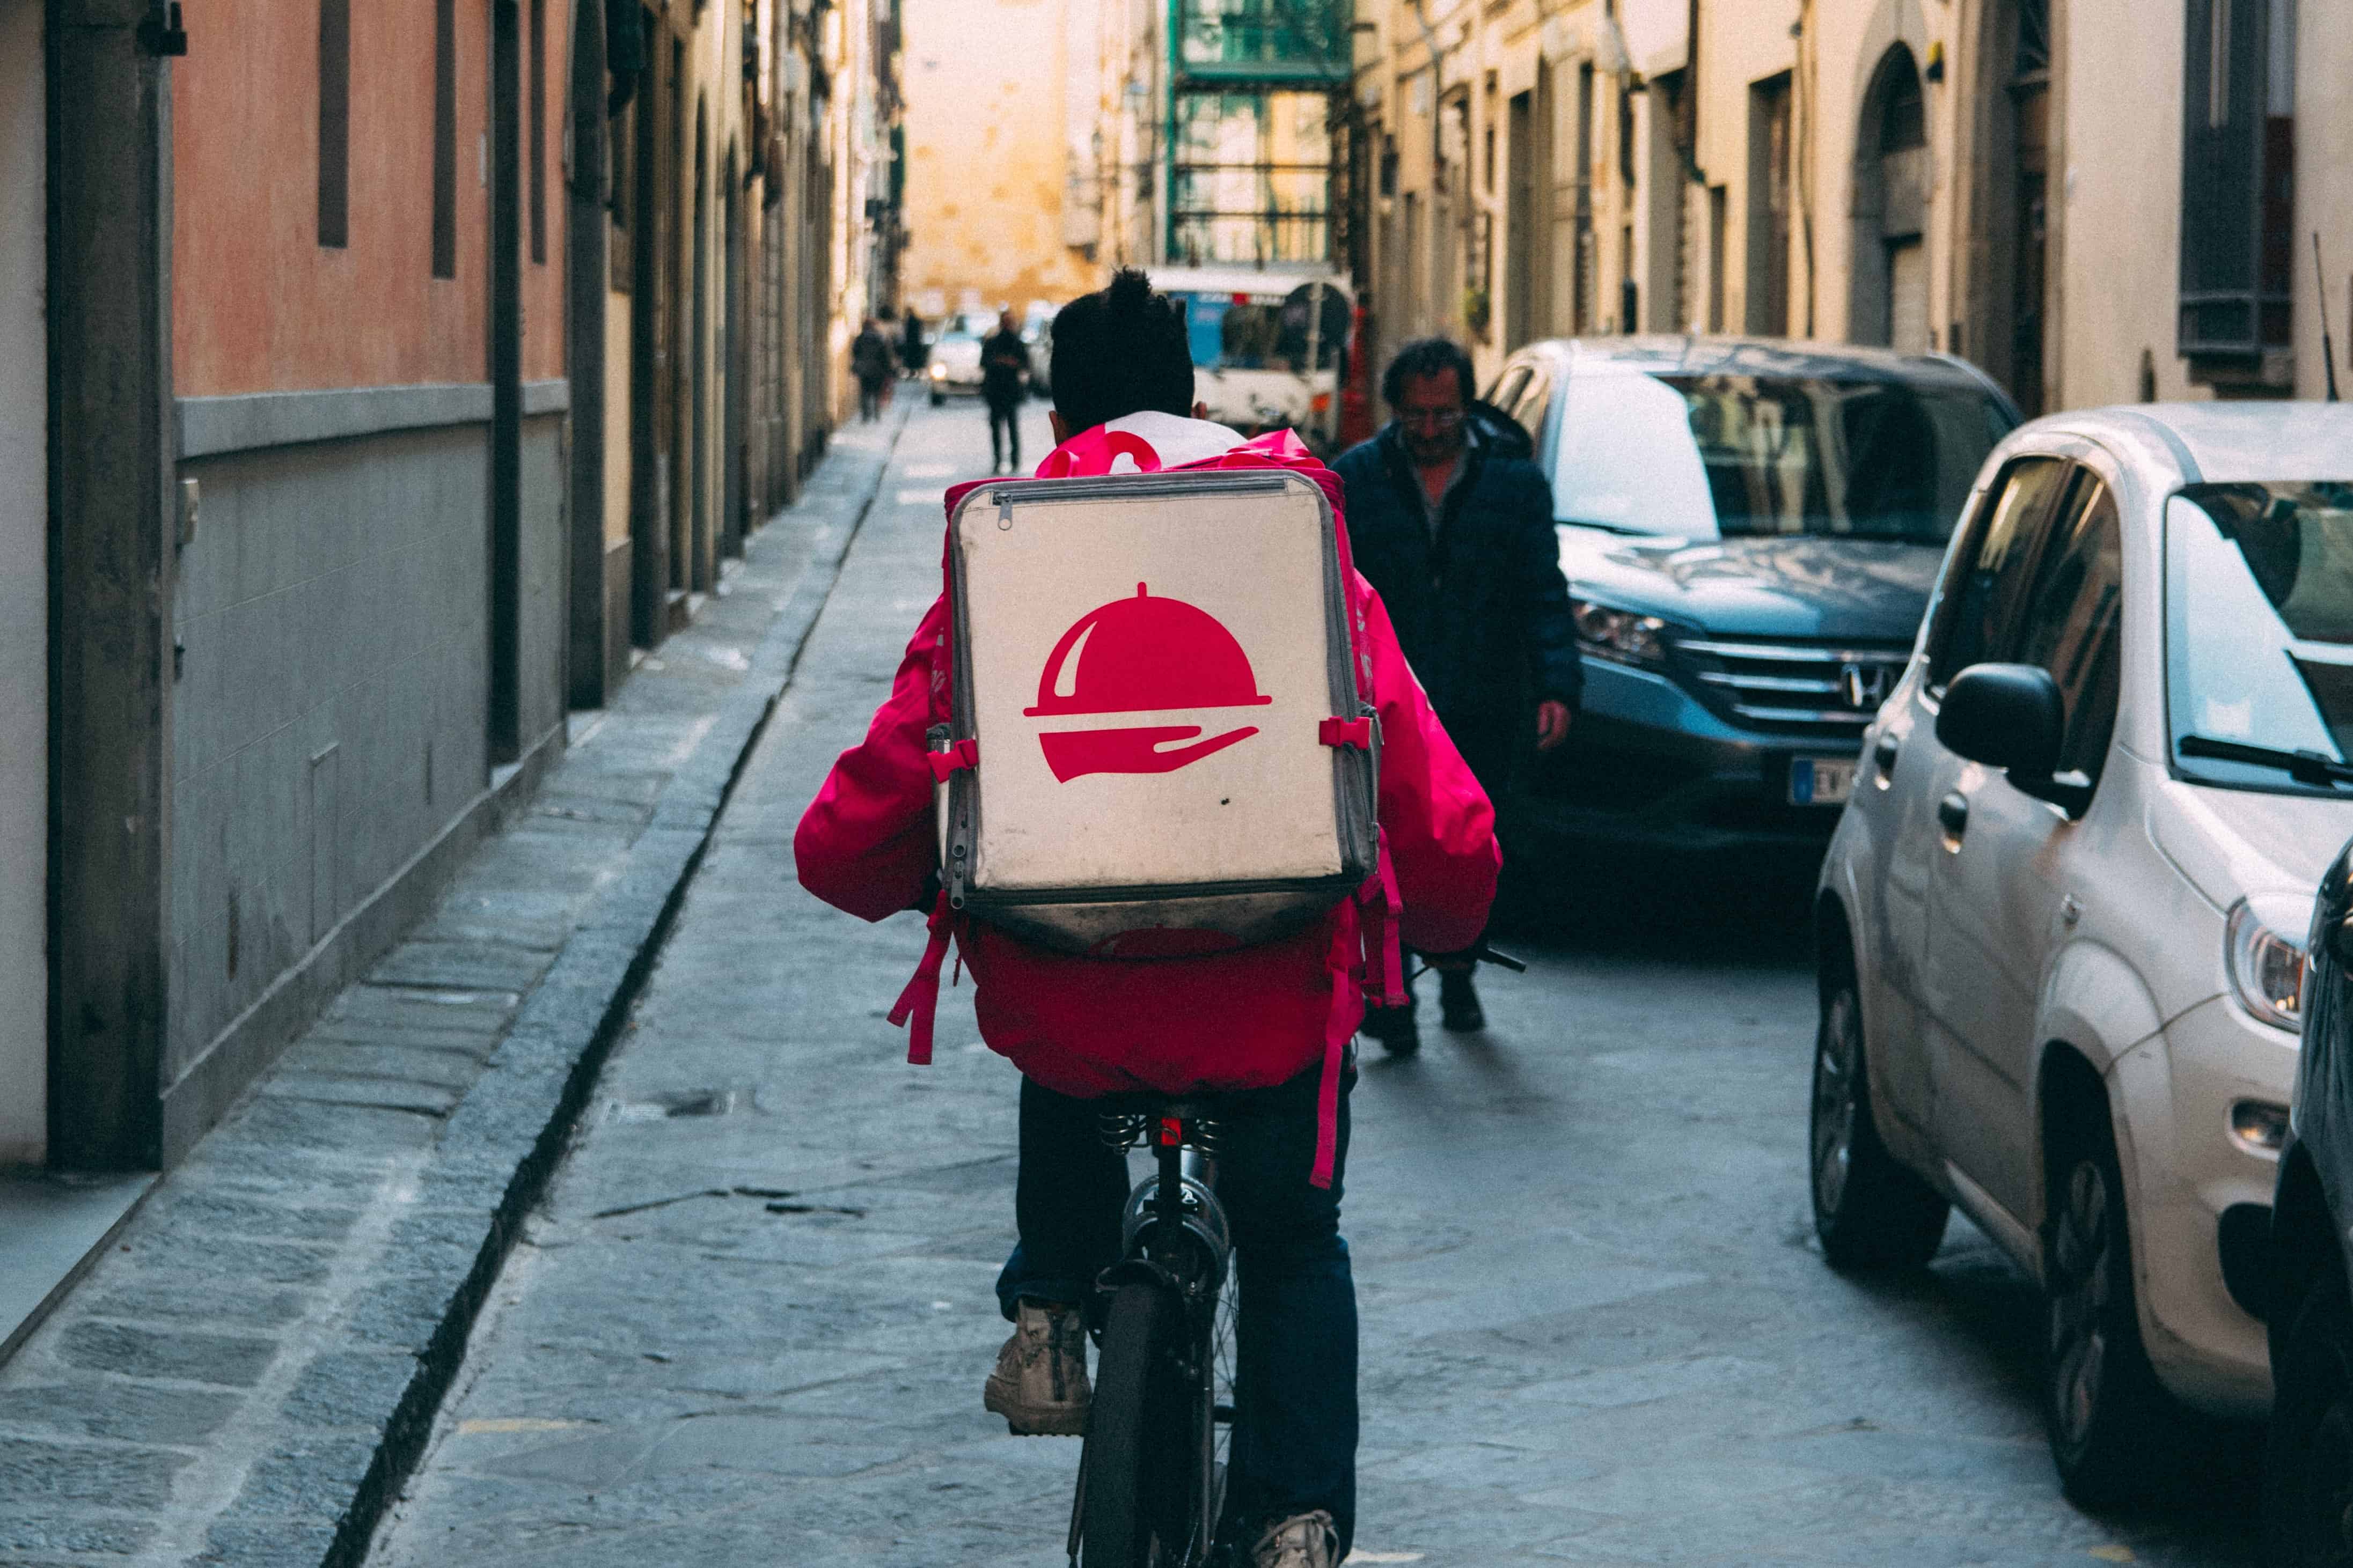 image-bike-food-delivery